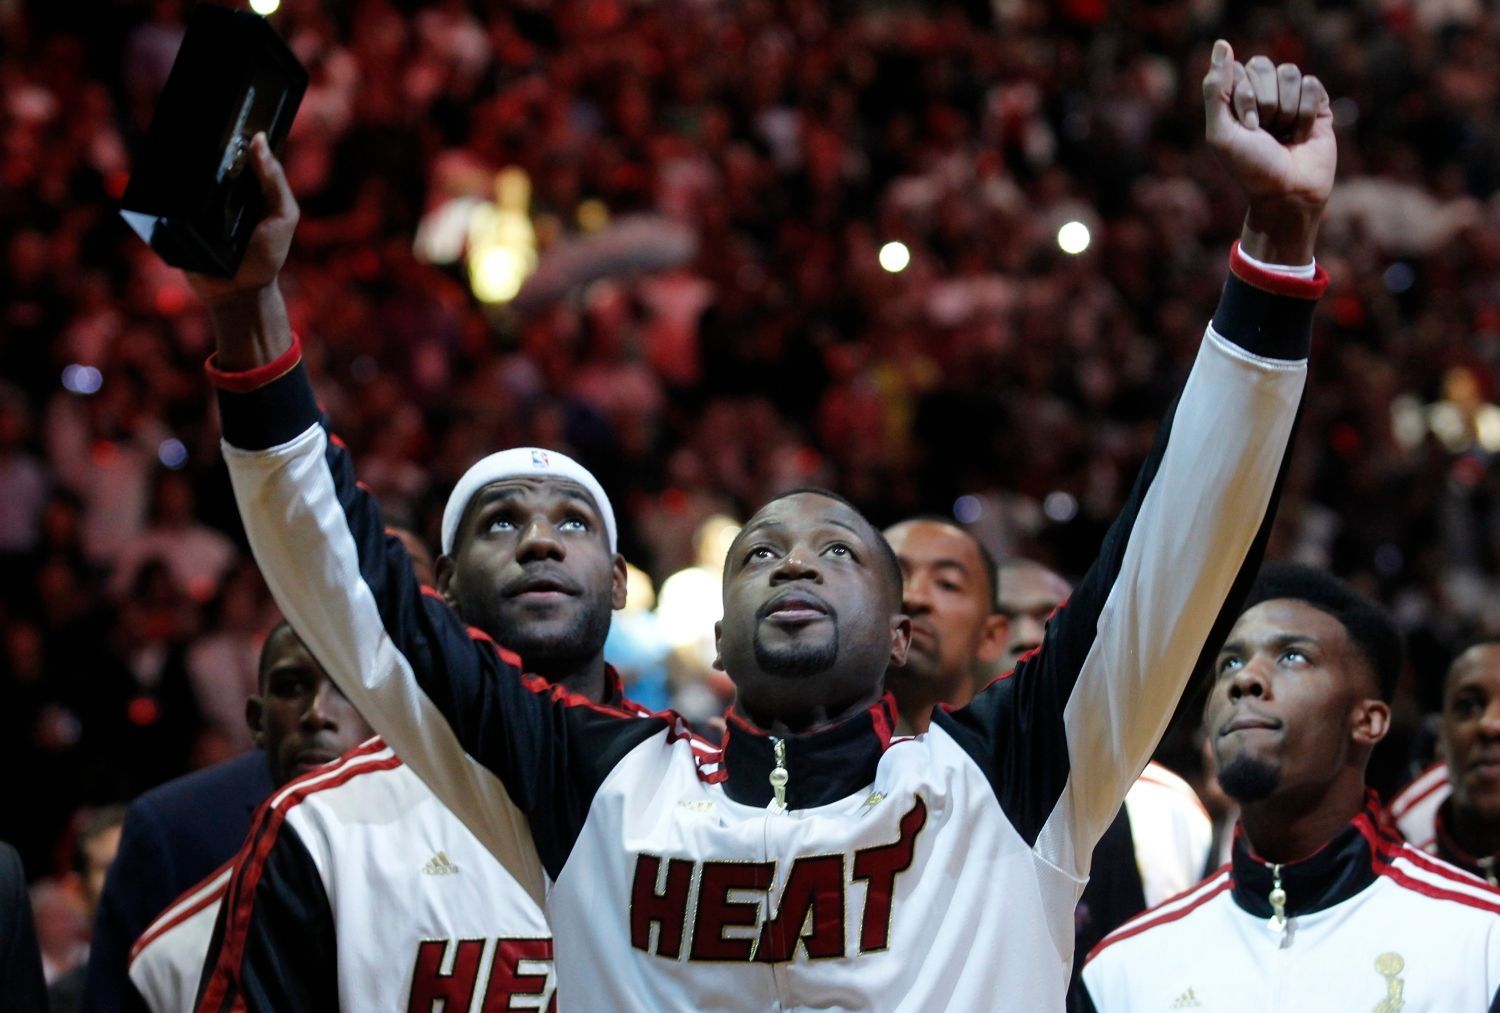 Basketbalisté LeBron James, Dwayne Wade a Norris Cole v zahajovacím zápase NBA 2012/13 mezi Miami Heat a Bostonem Celtics.